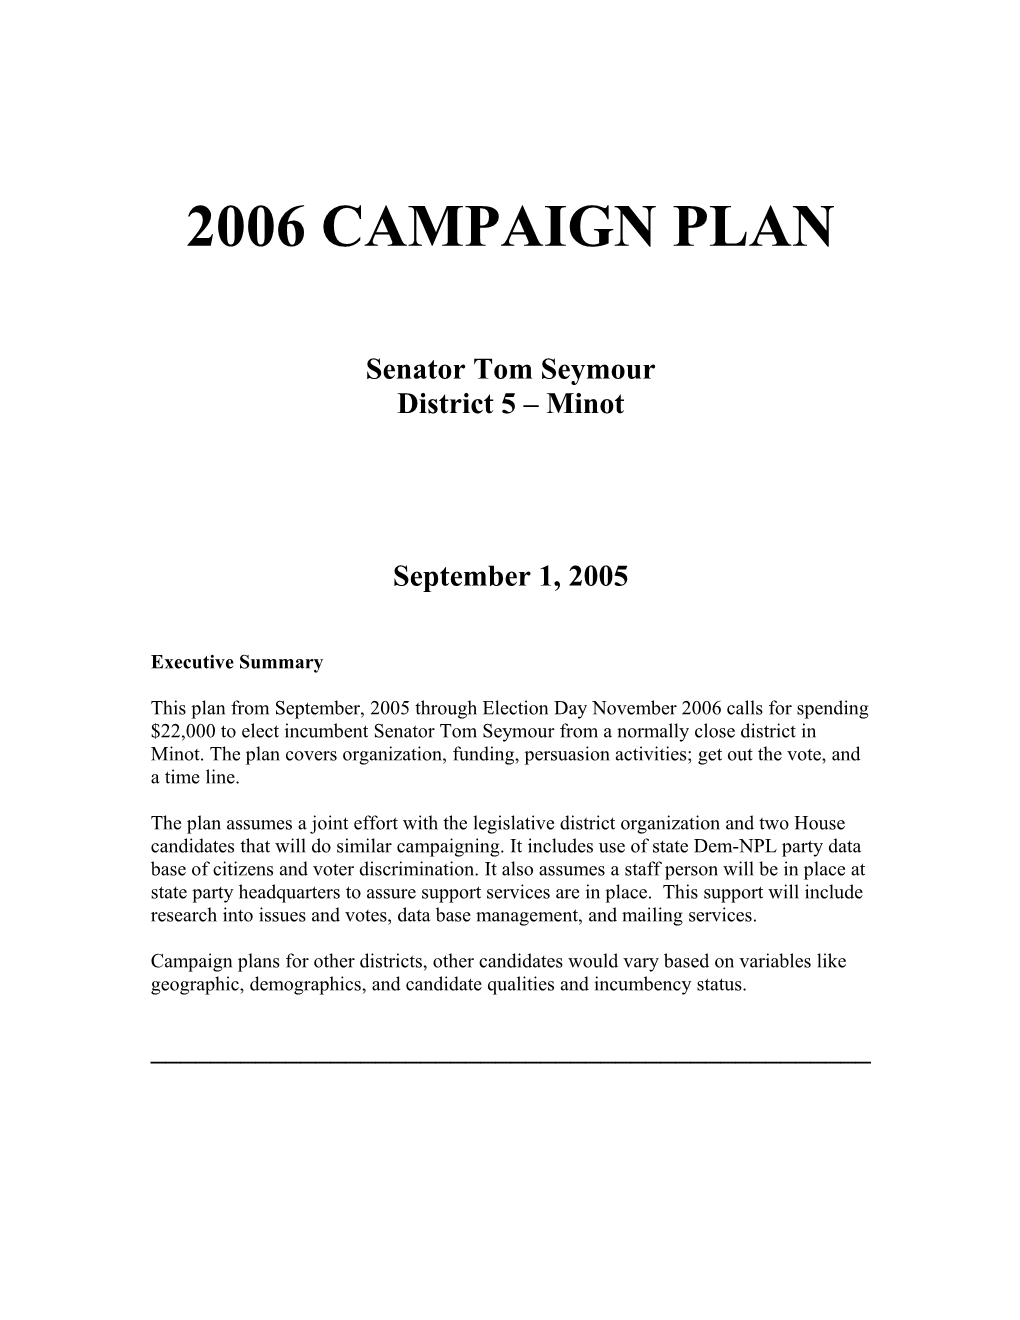 2006 Campaign Plan